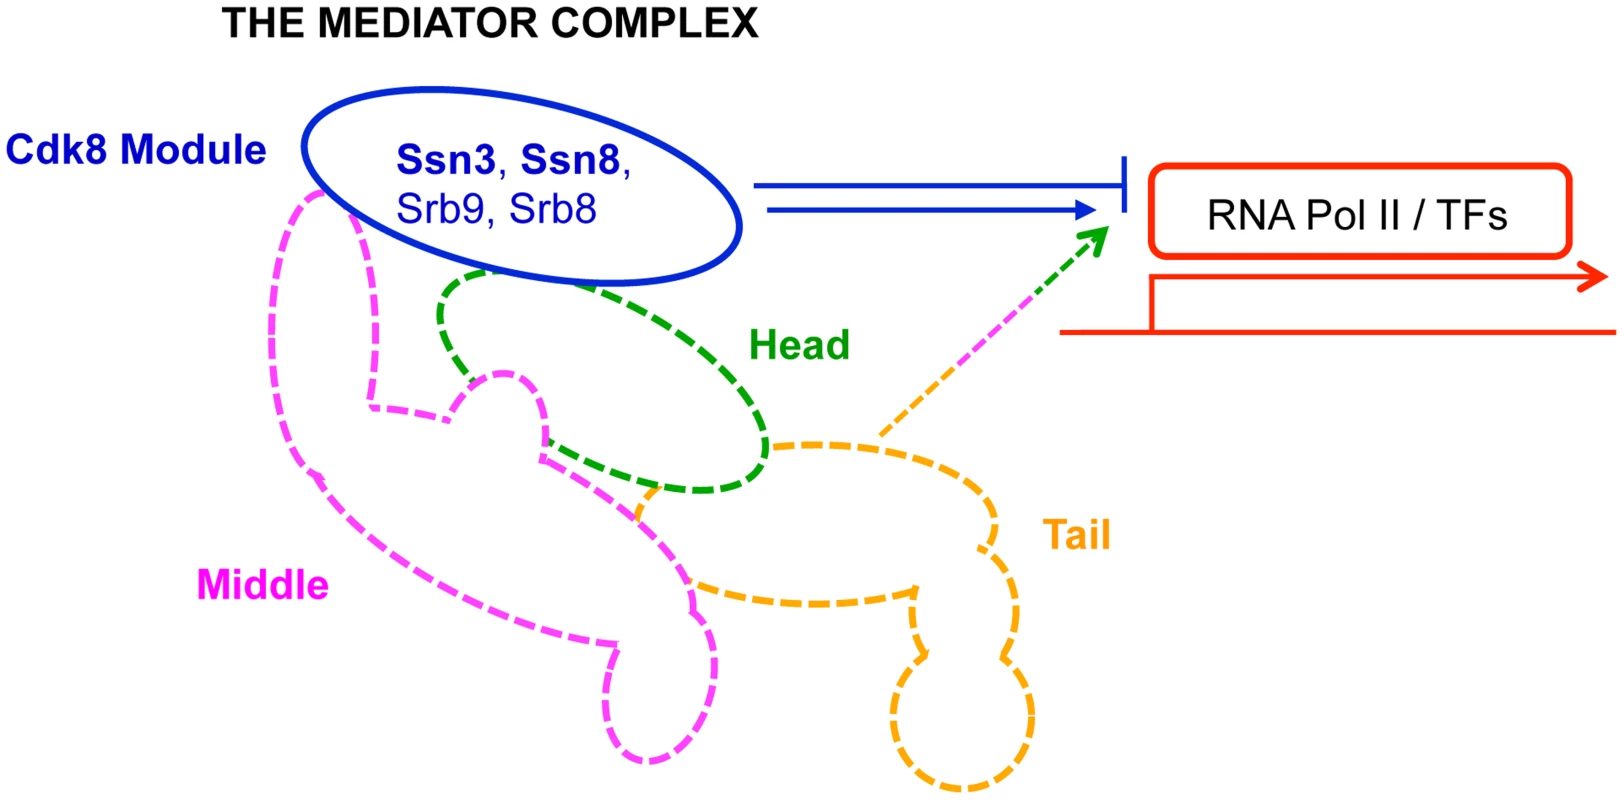 Primary role of Mediator modules in transcription.